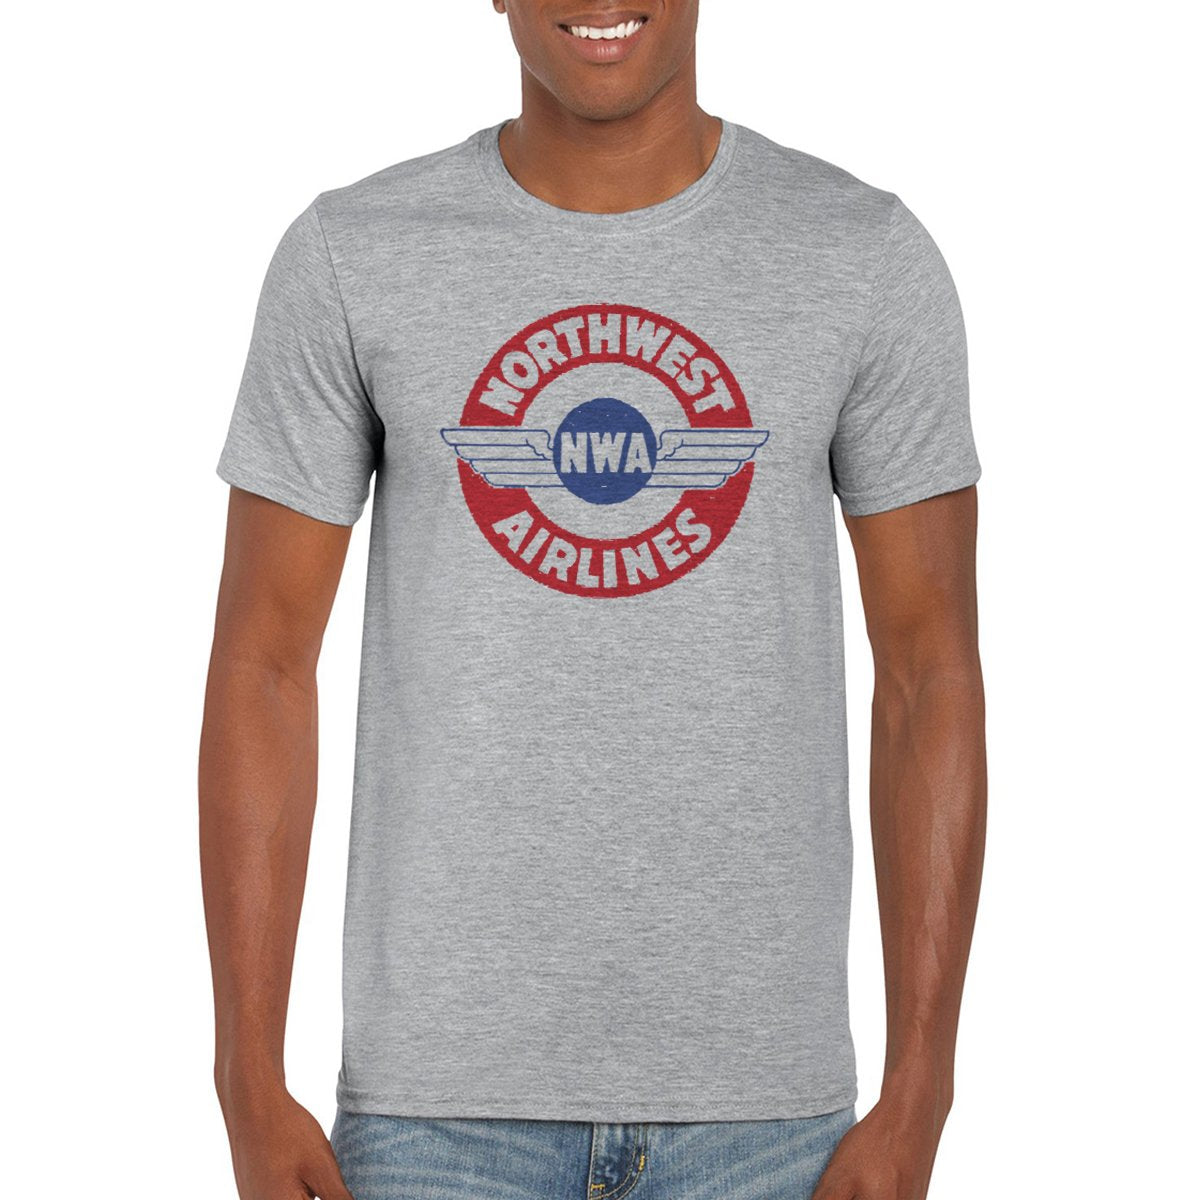 NORTHWEST AIRLINES LOGO T-Shirt